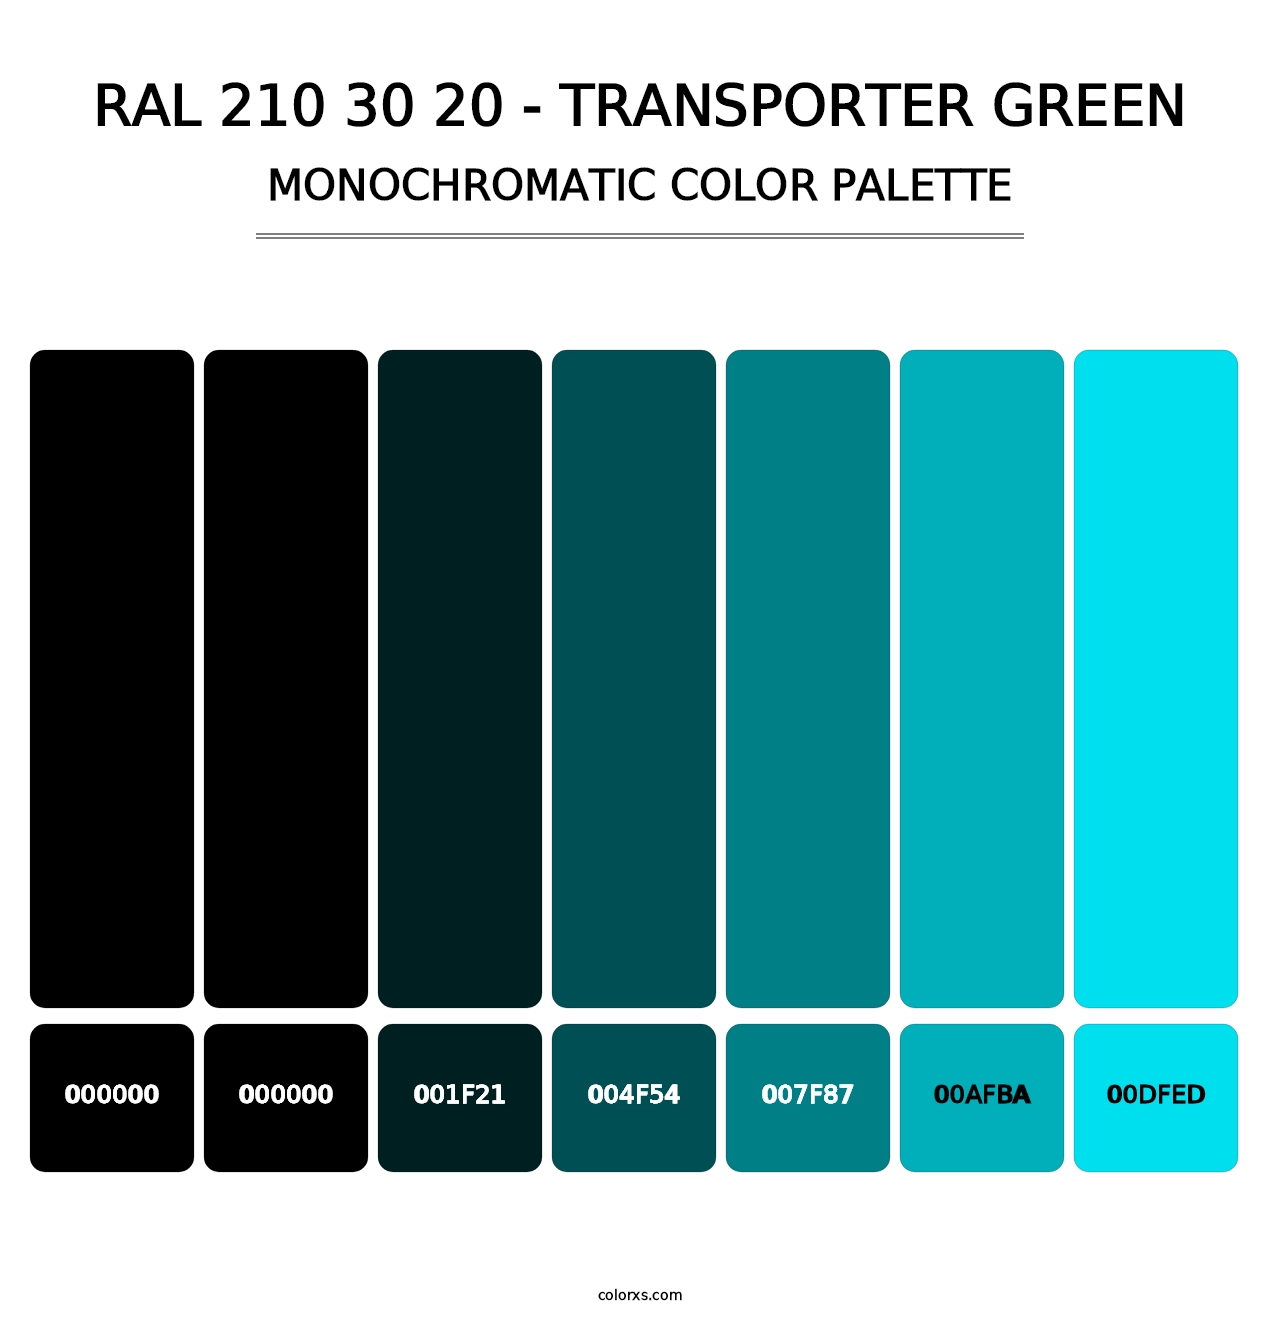 RAL 210 30 20 - Transporter Green - Monochromatic Color Palette